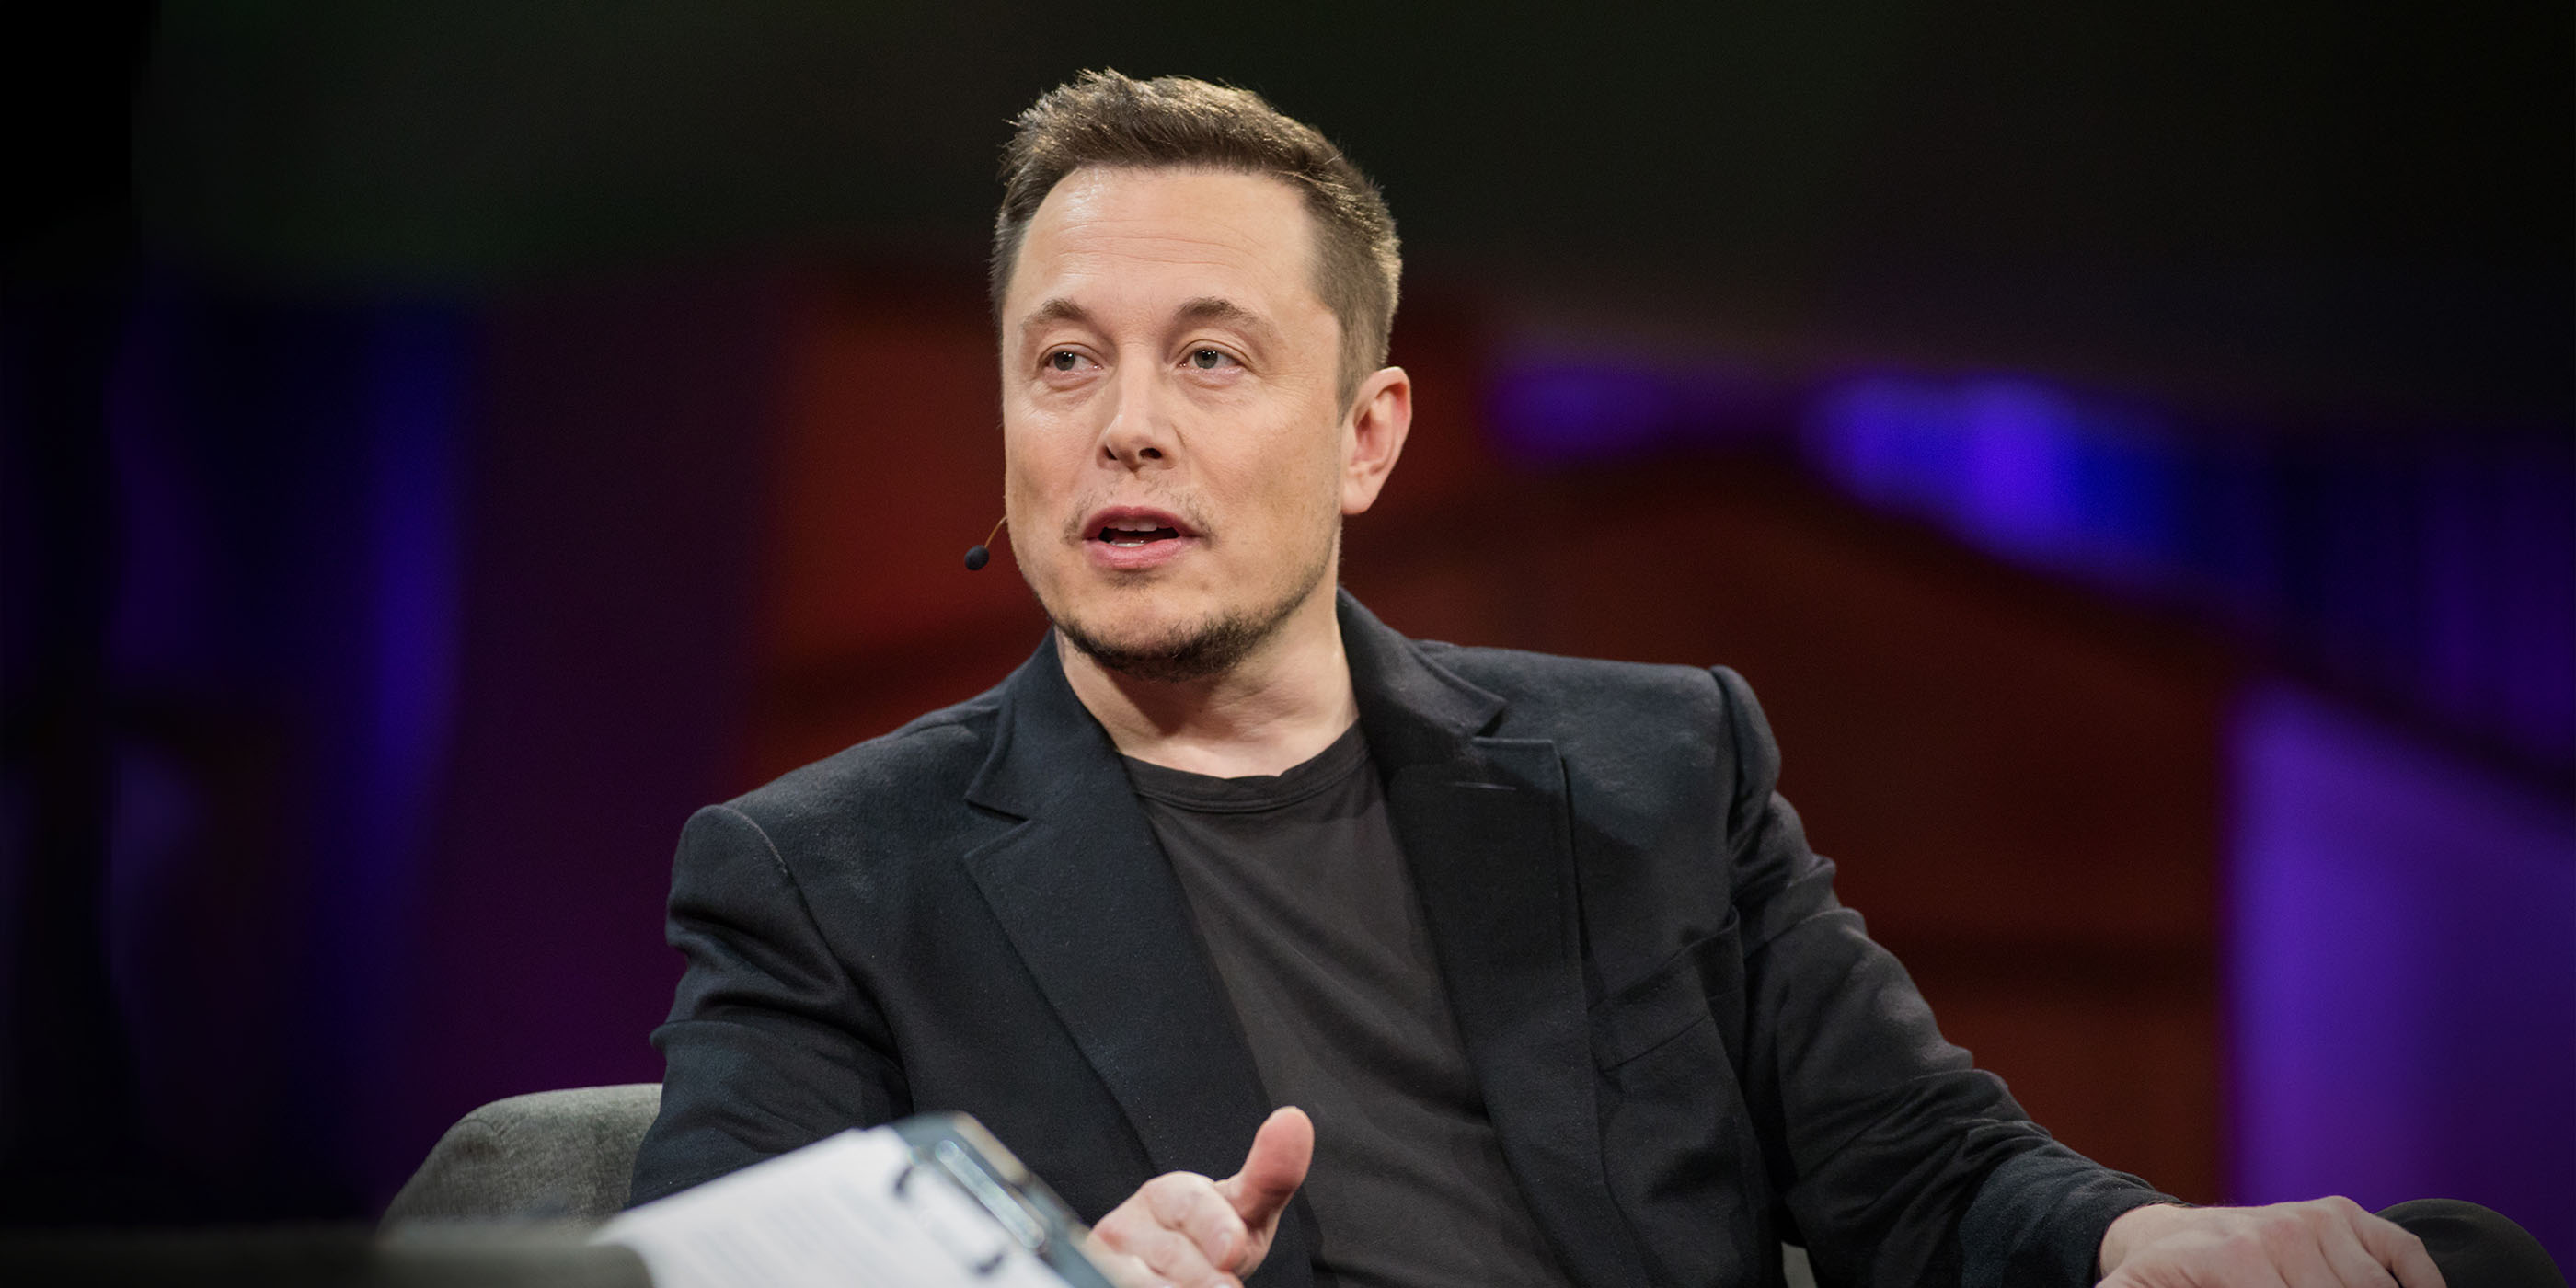 Elon Musk's Humorous Response to Apple's Vision Pro Price